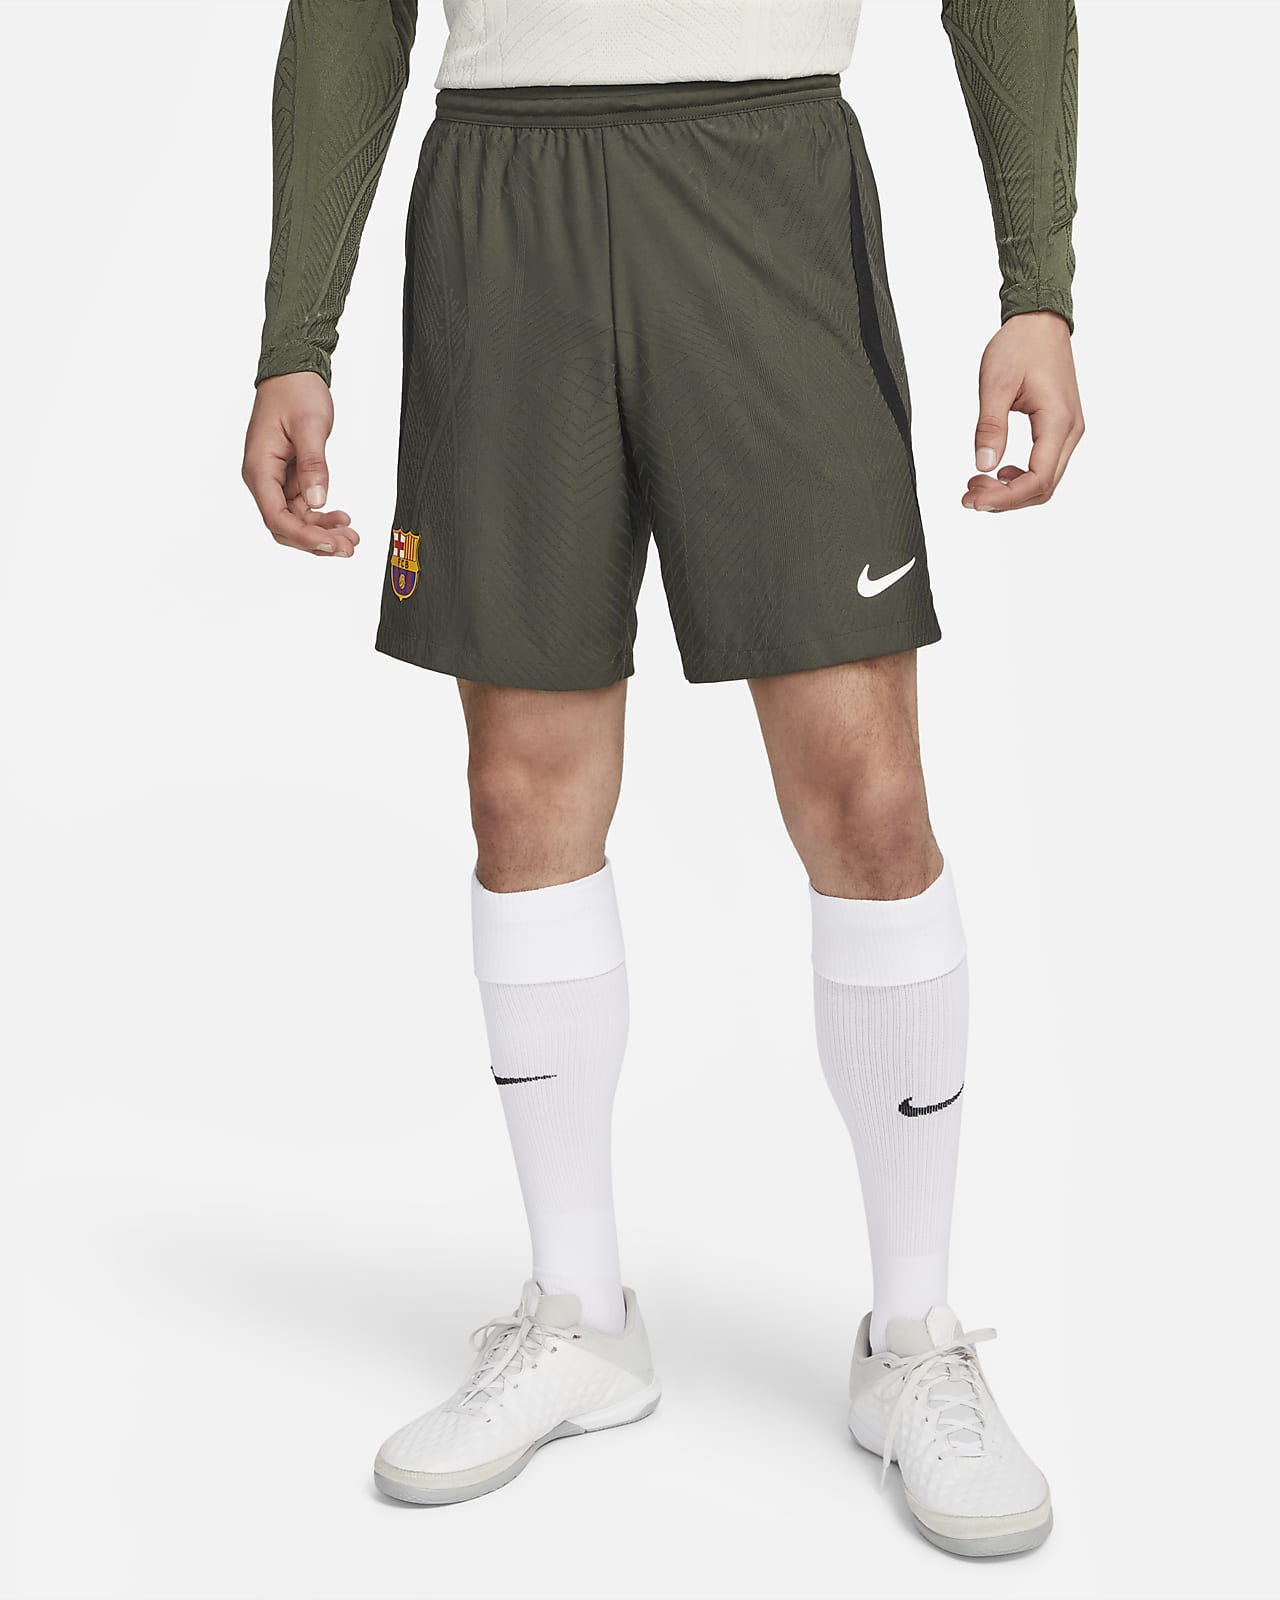 FC Barcelona Strike Elite Pantalons curts de teixit Knit Nike Dri-FIT ADV de futbol - Home